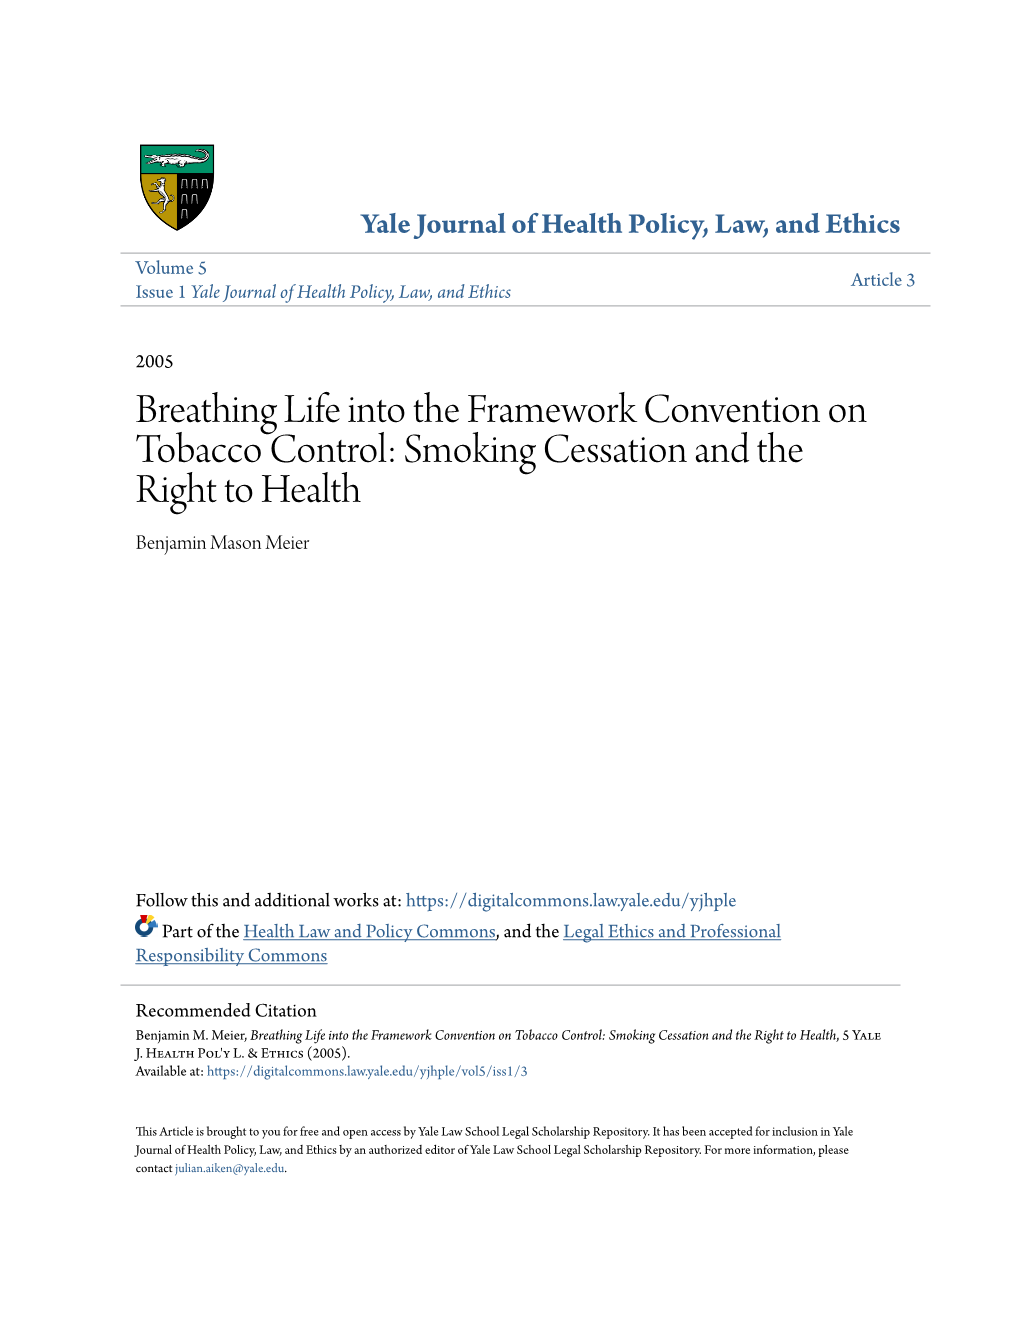 Smoking Cessation and the Right to Health Benjamin Mason Meier